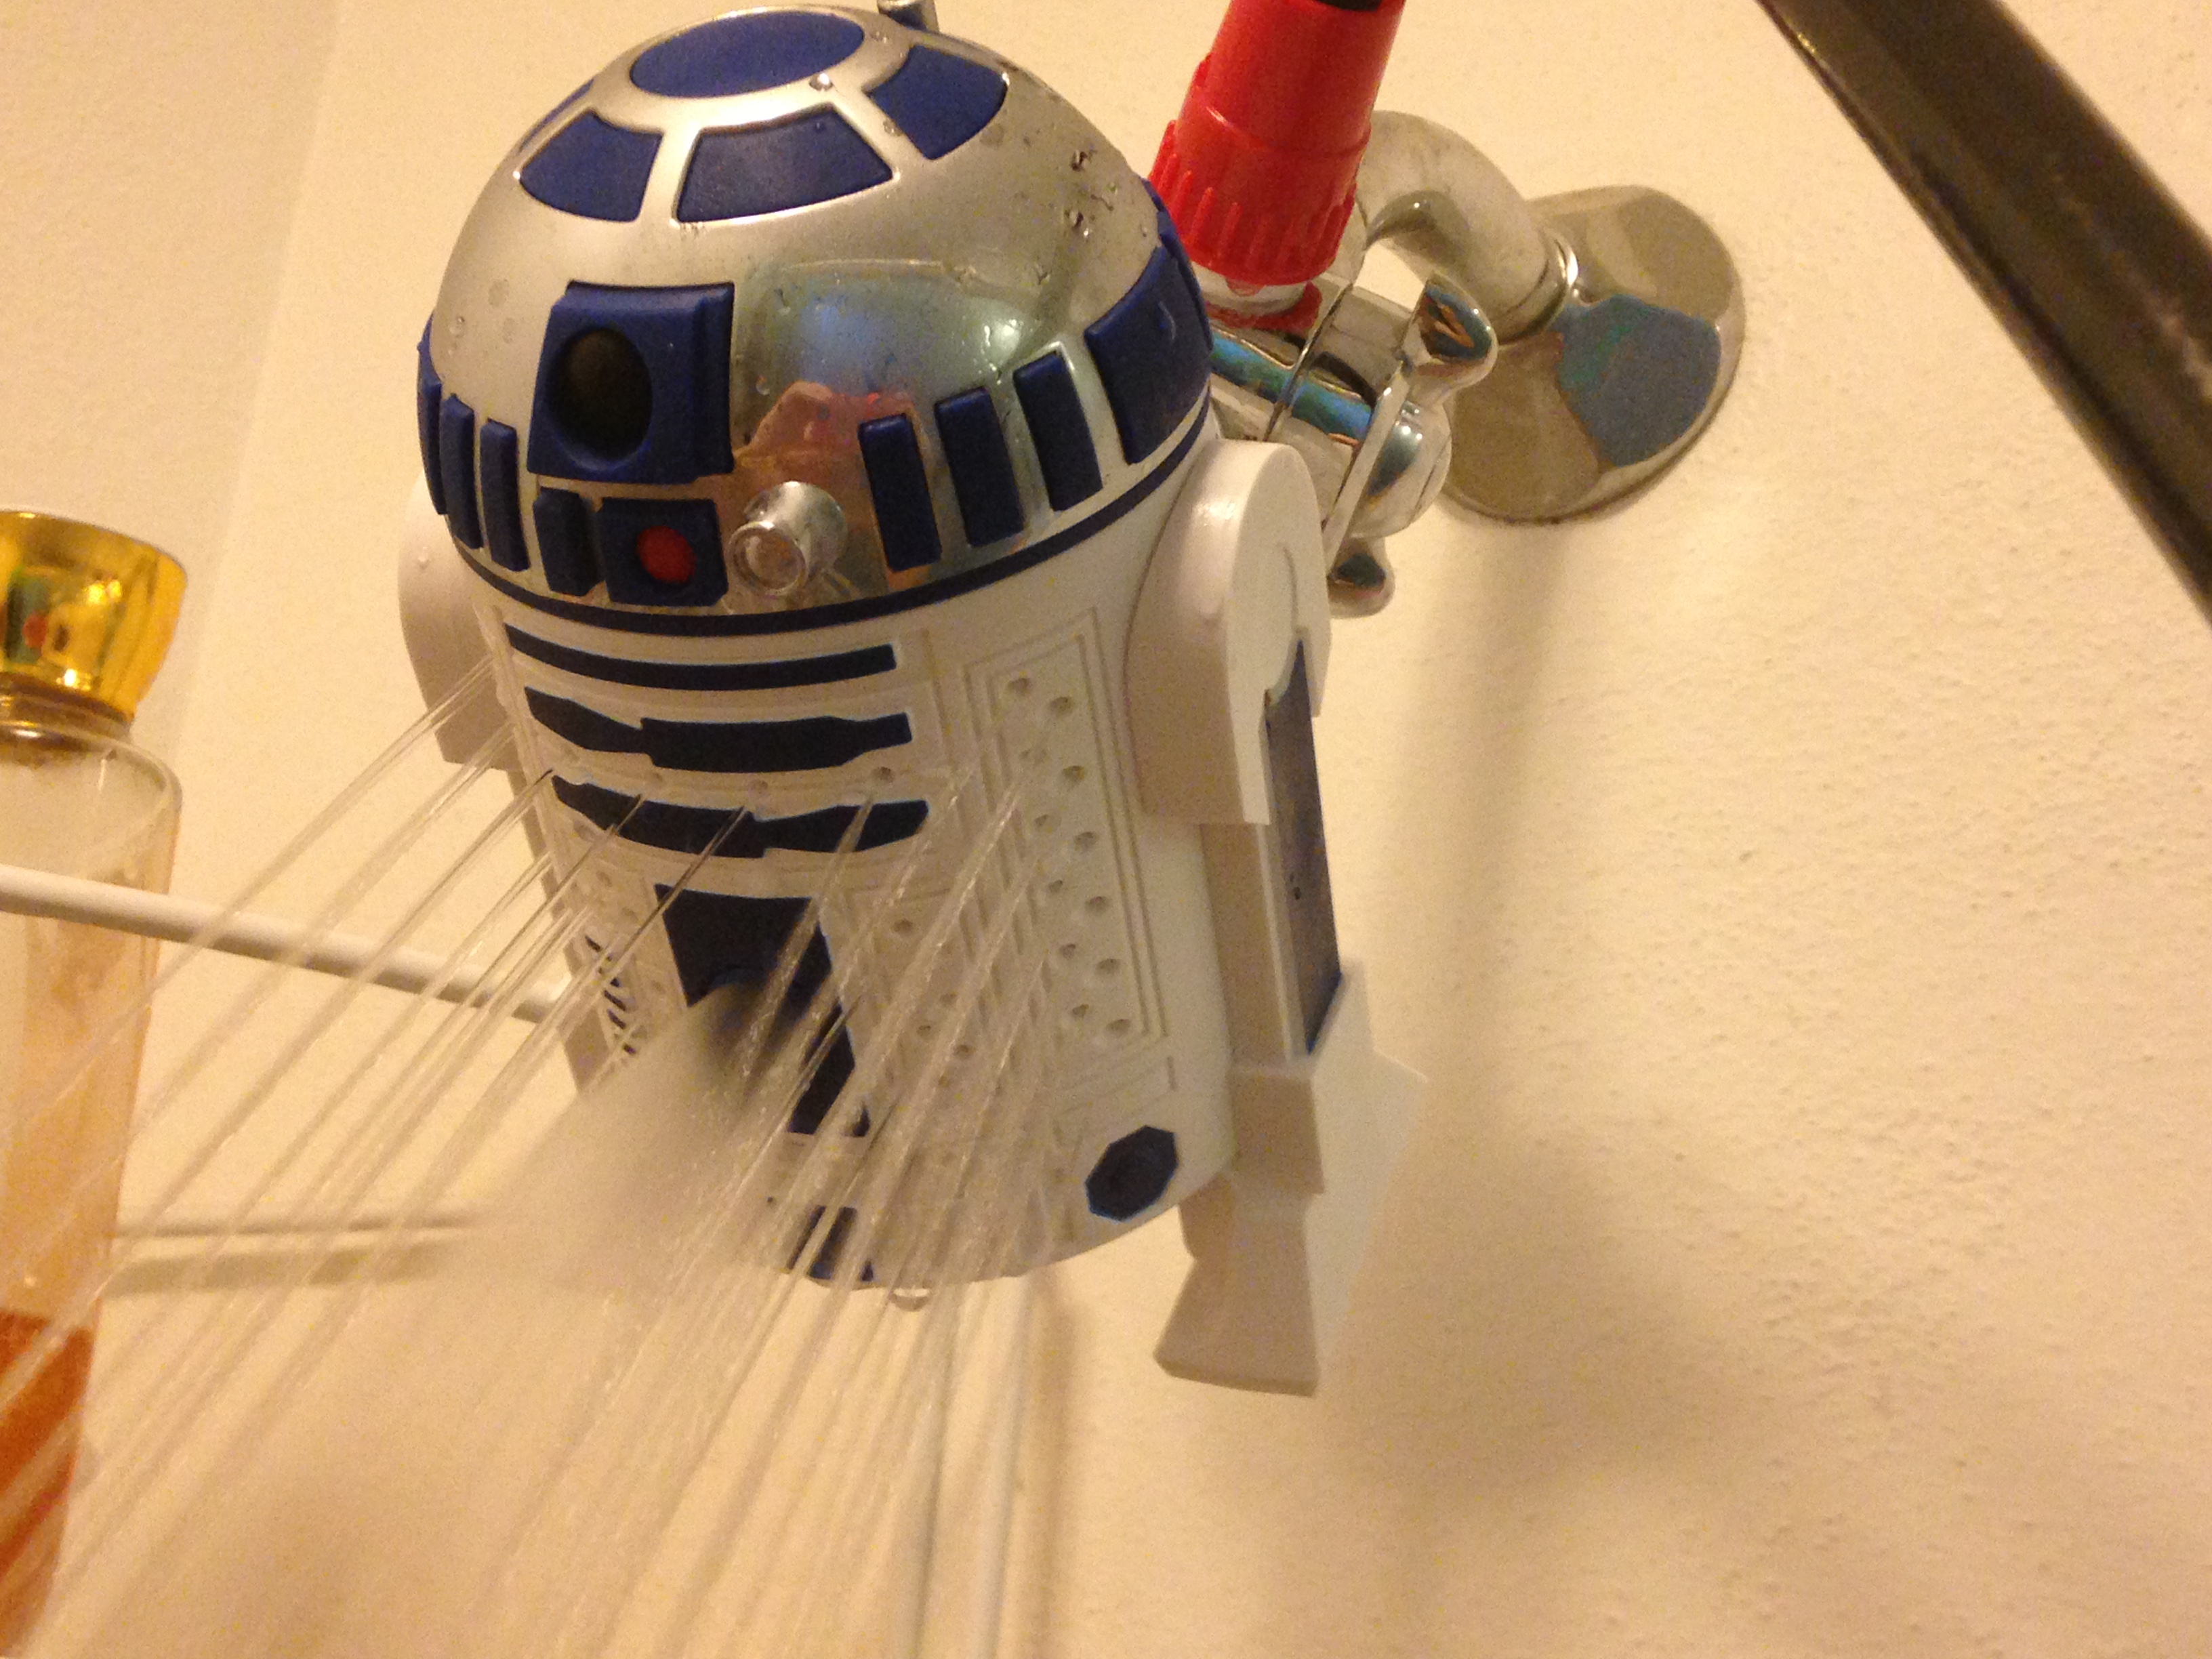 Star wars shower heads from oxygenics